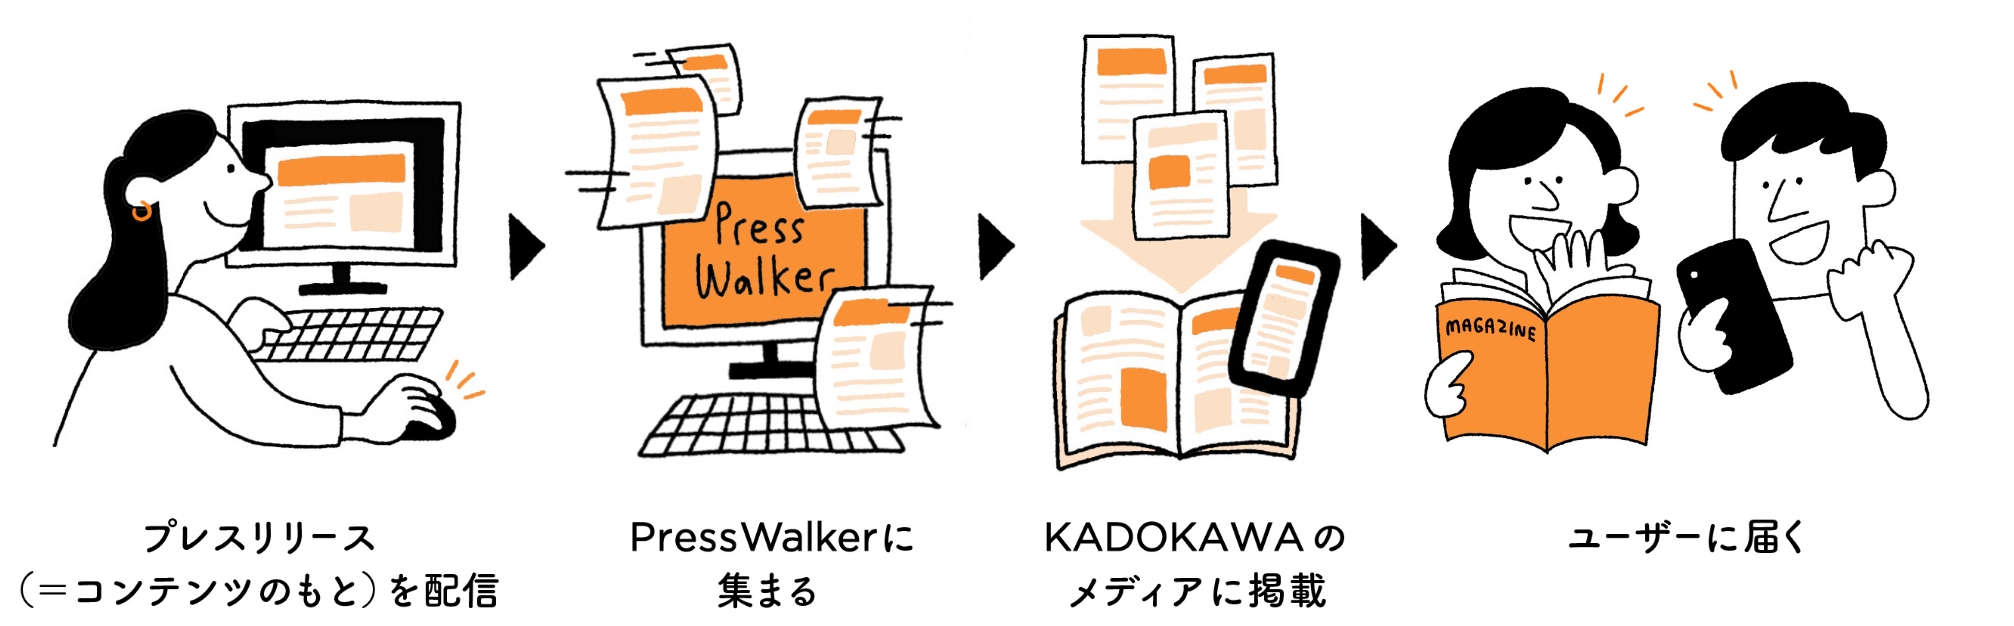 KADOKAWAのメディア事業の成長